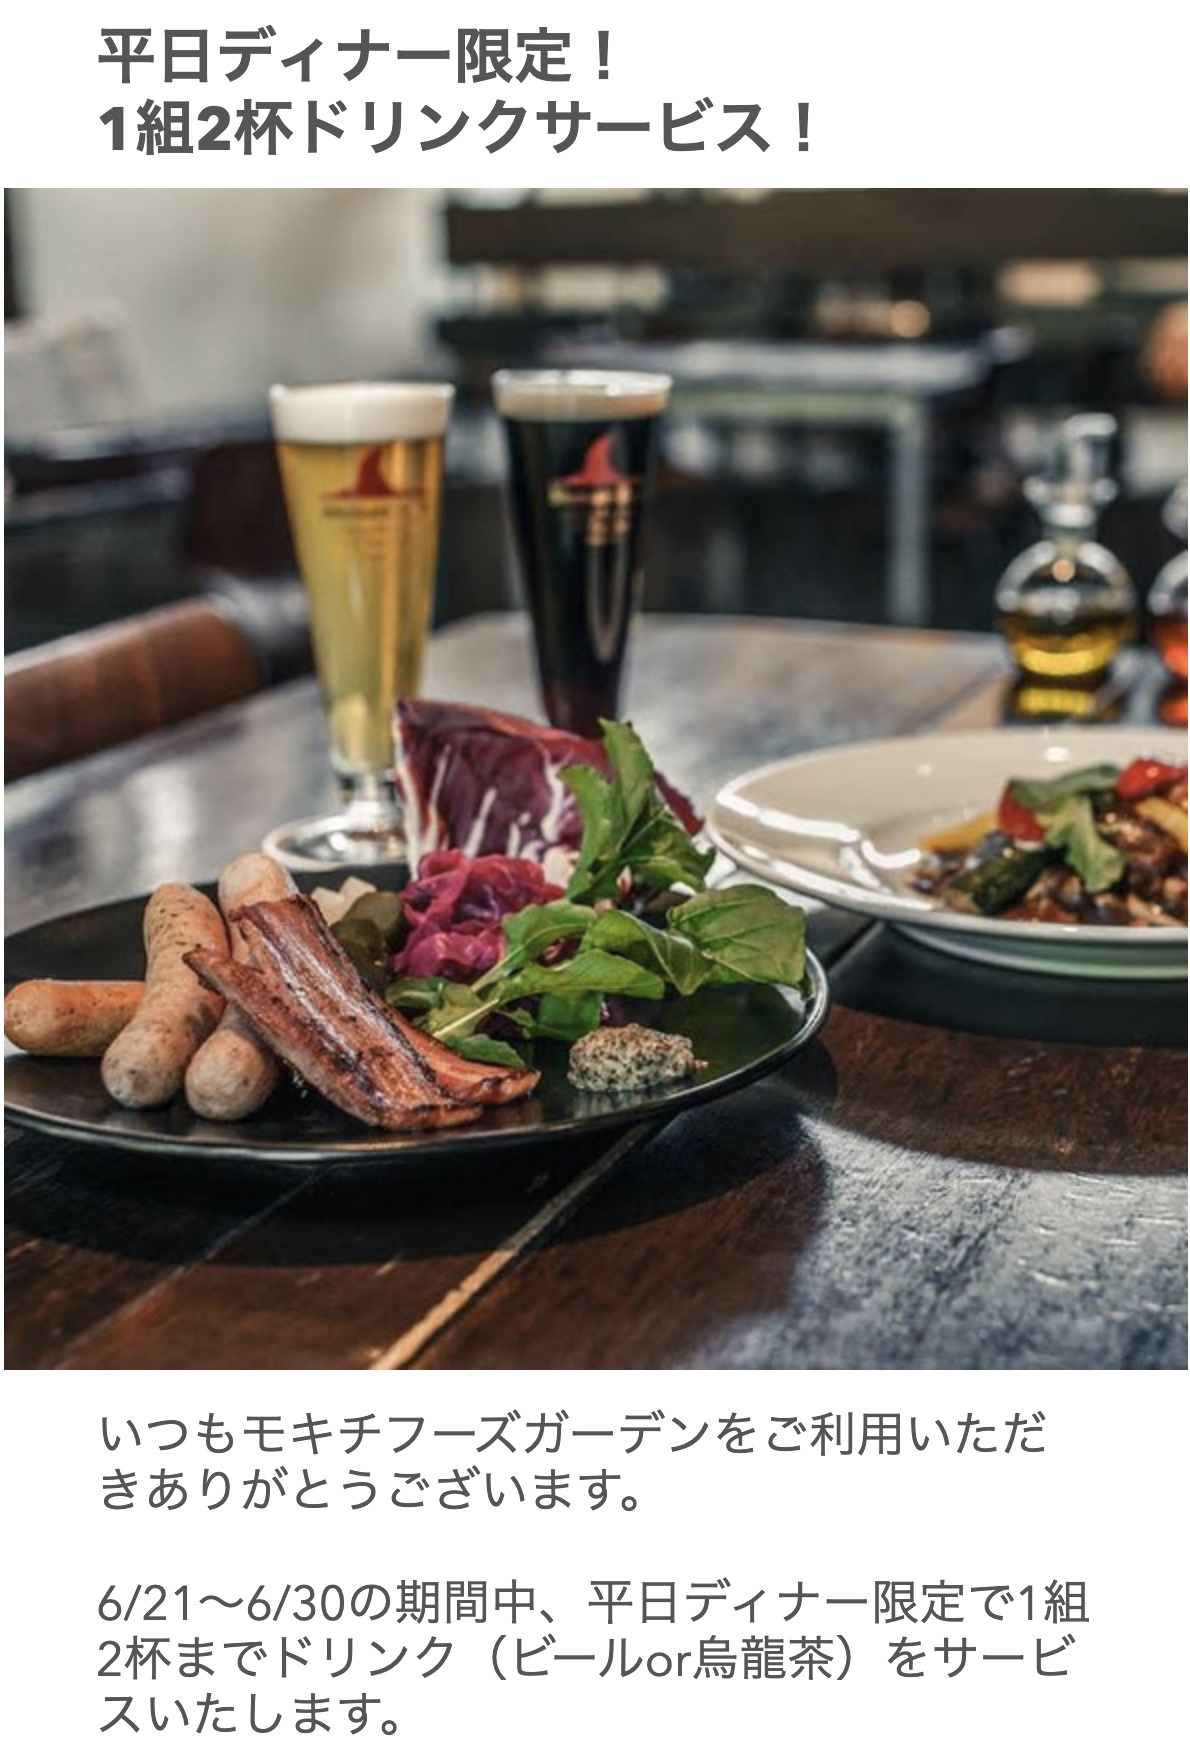 MOKICHI FOODS GARDEN 〜 湘南唯一の蔵元 熊澤酒造の直営レストランはクラフトビールも料理も地元食材にこだわったお店